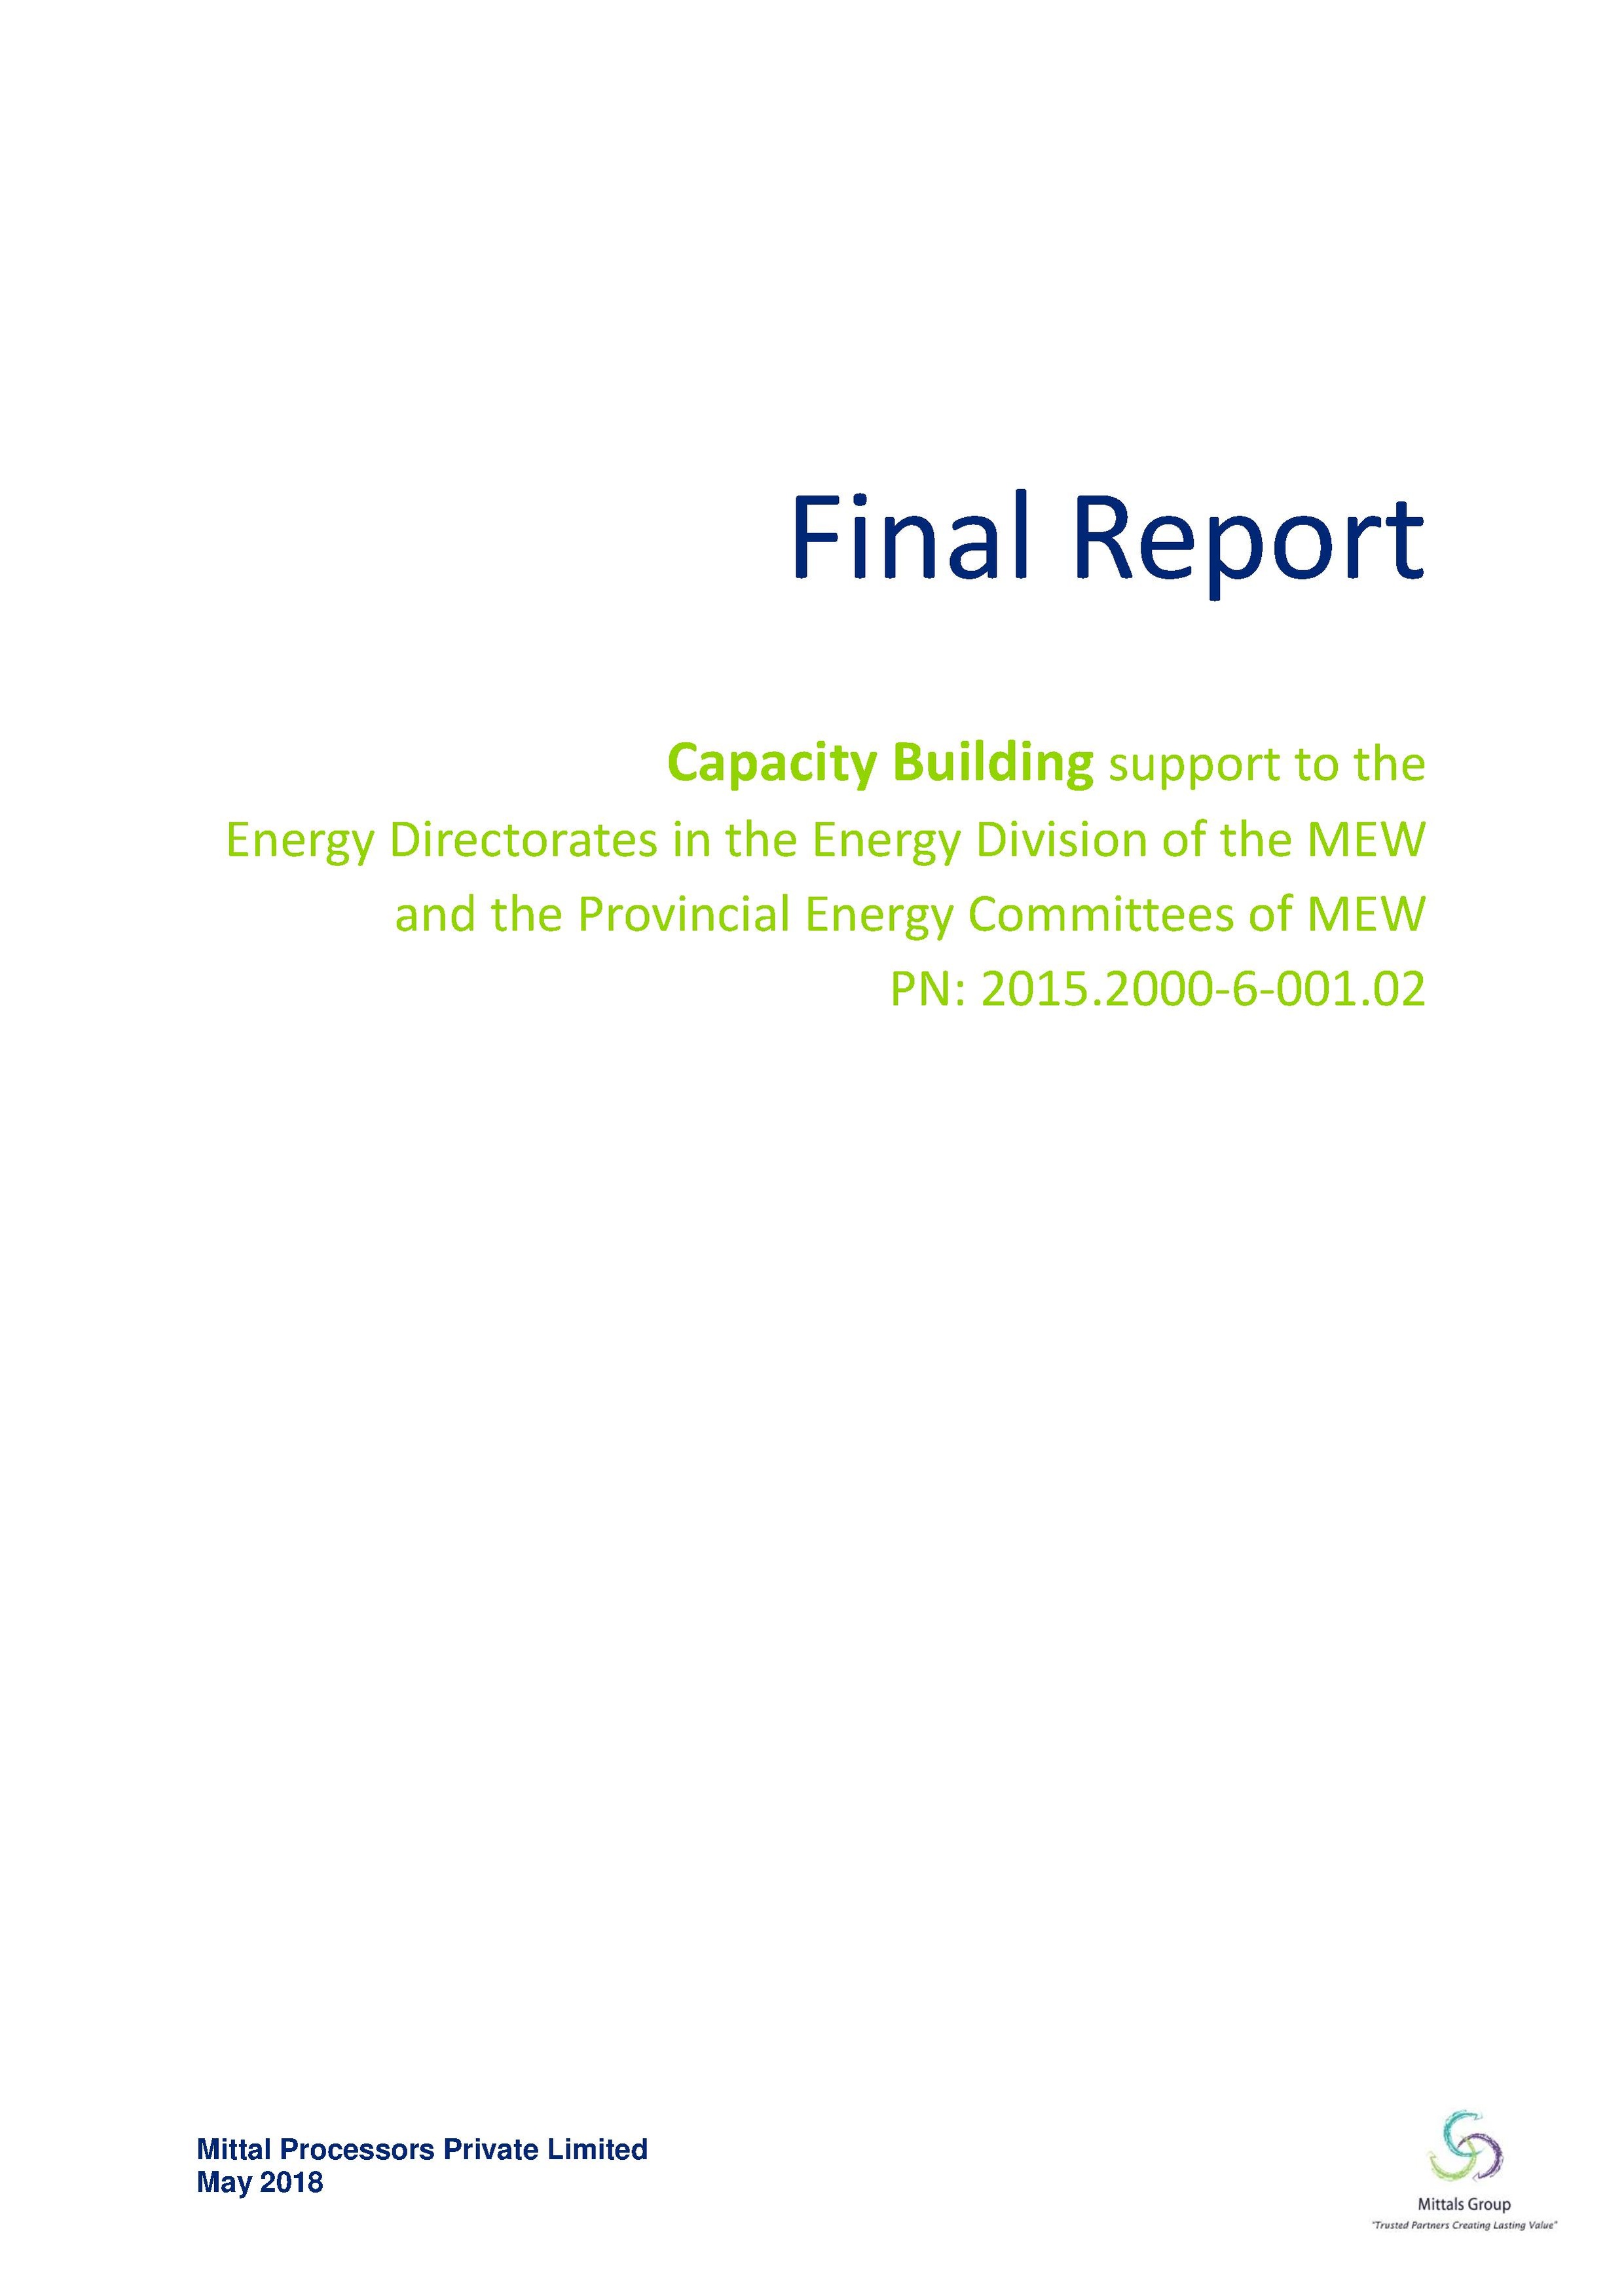 https://energypedia.info/wiki/File:MPPL_Training_Report_PEC-Final.pdf